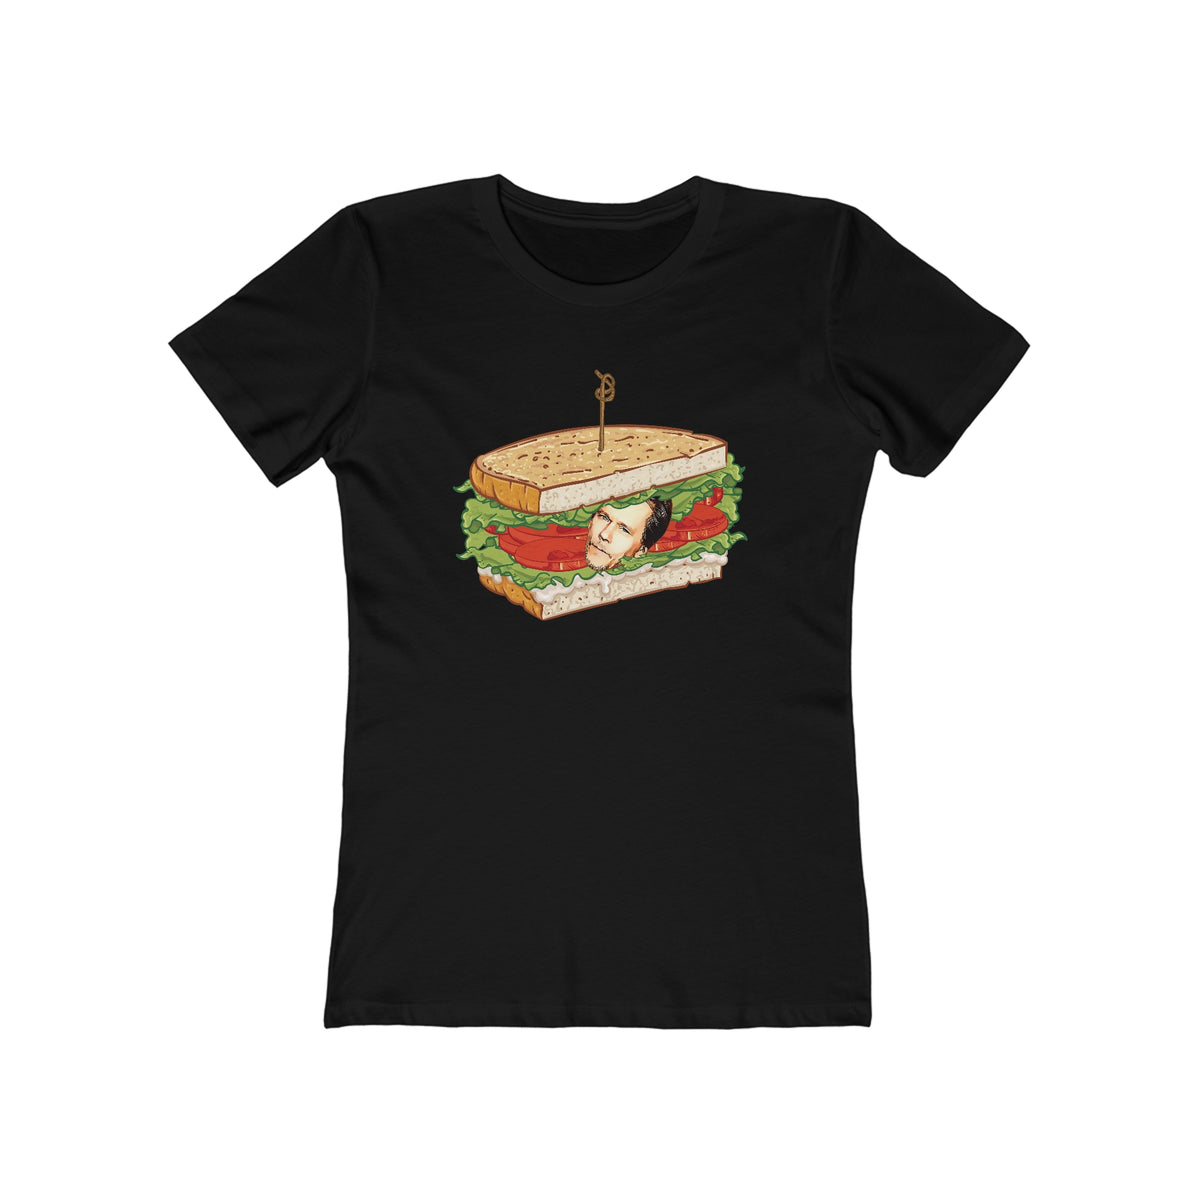 Kevin Bacon Blt - Women’s T-Shirt